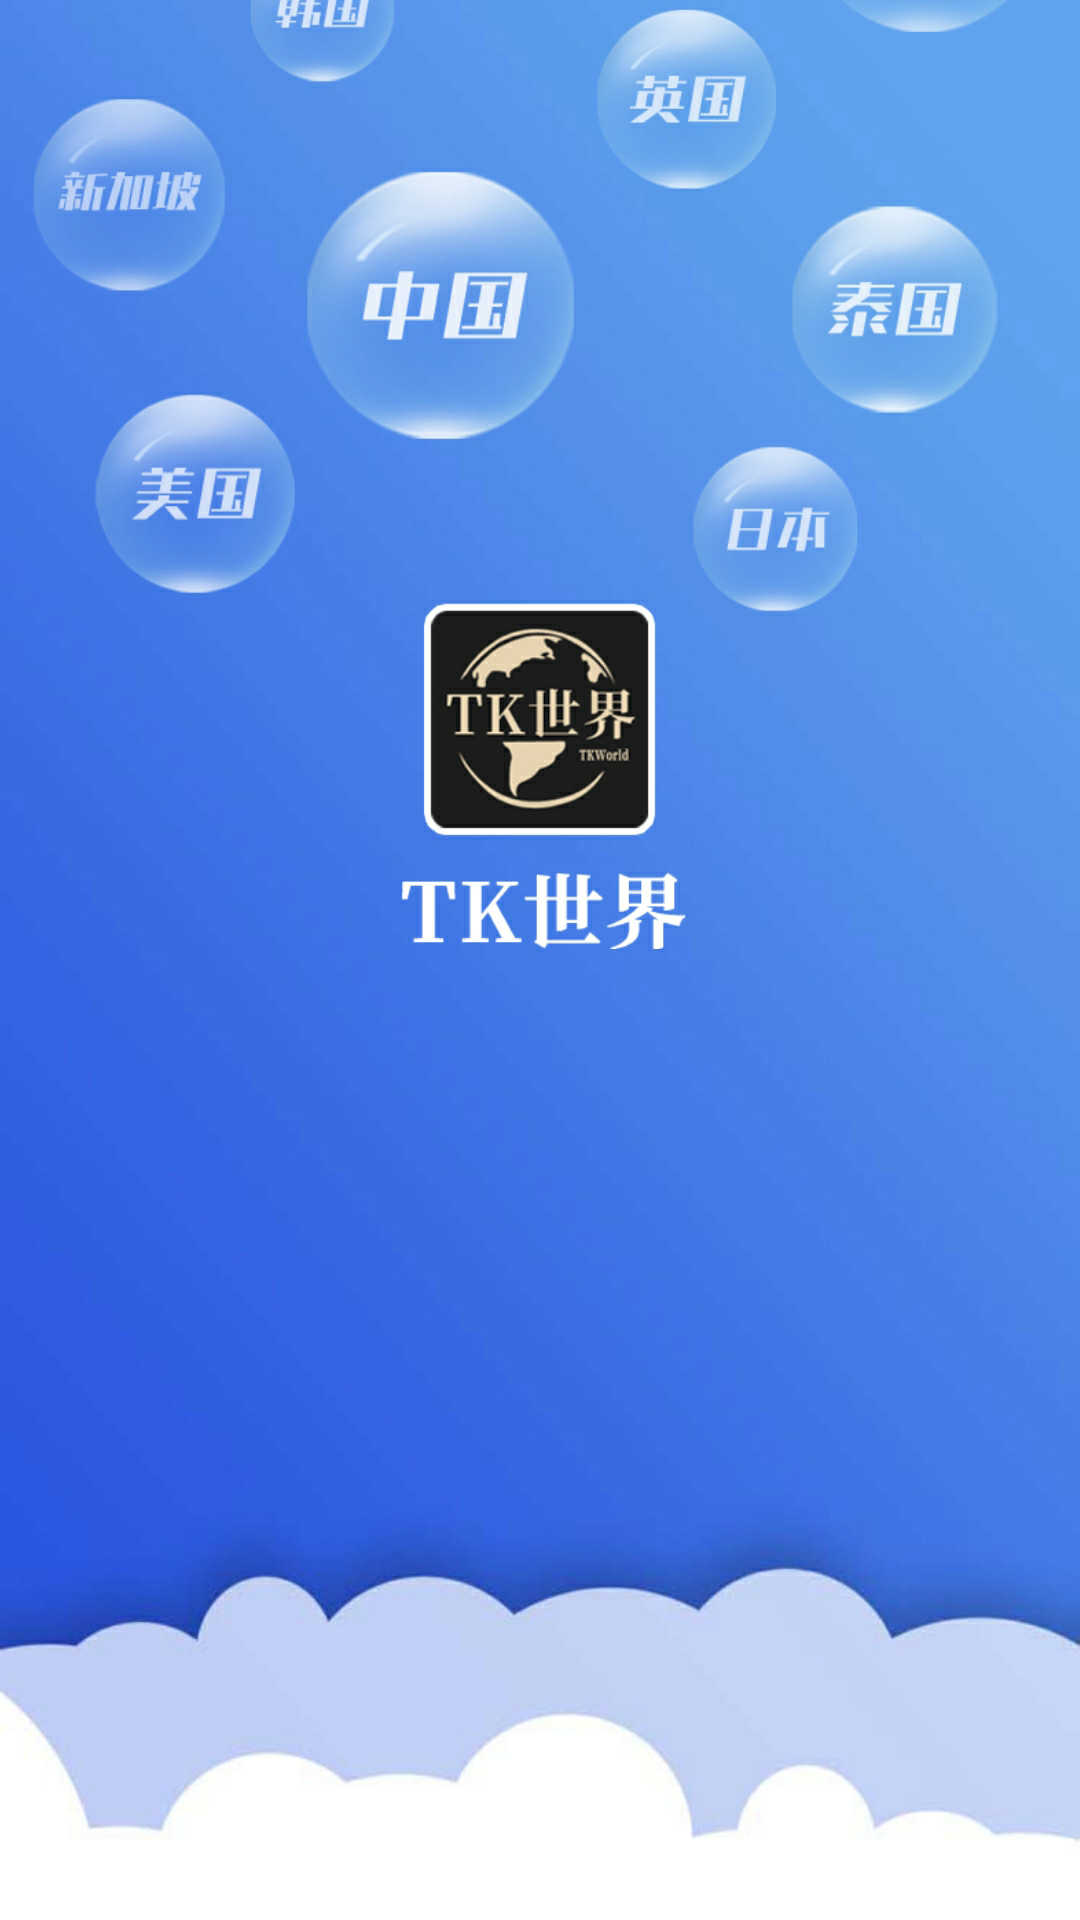 TK世界专业运营工具app官方版图2: